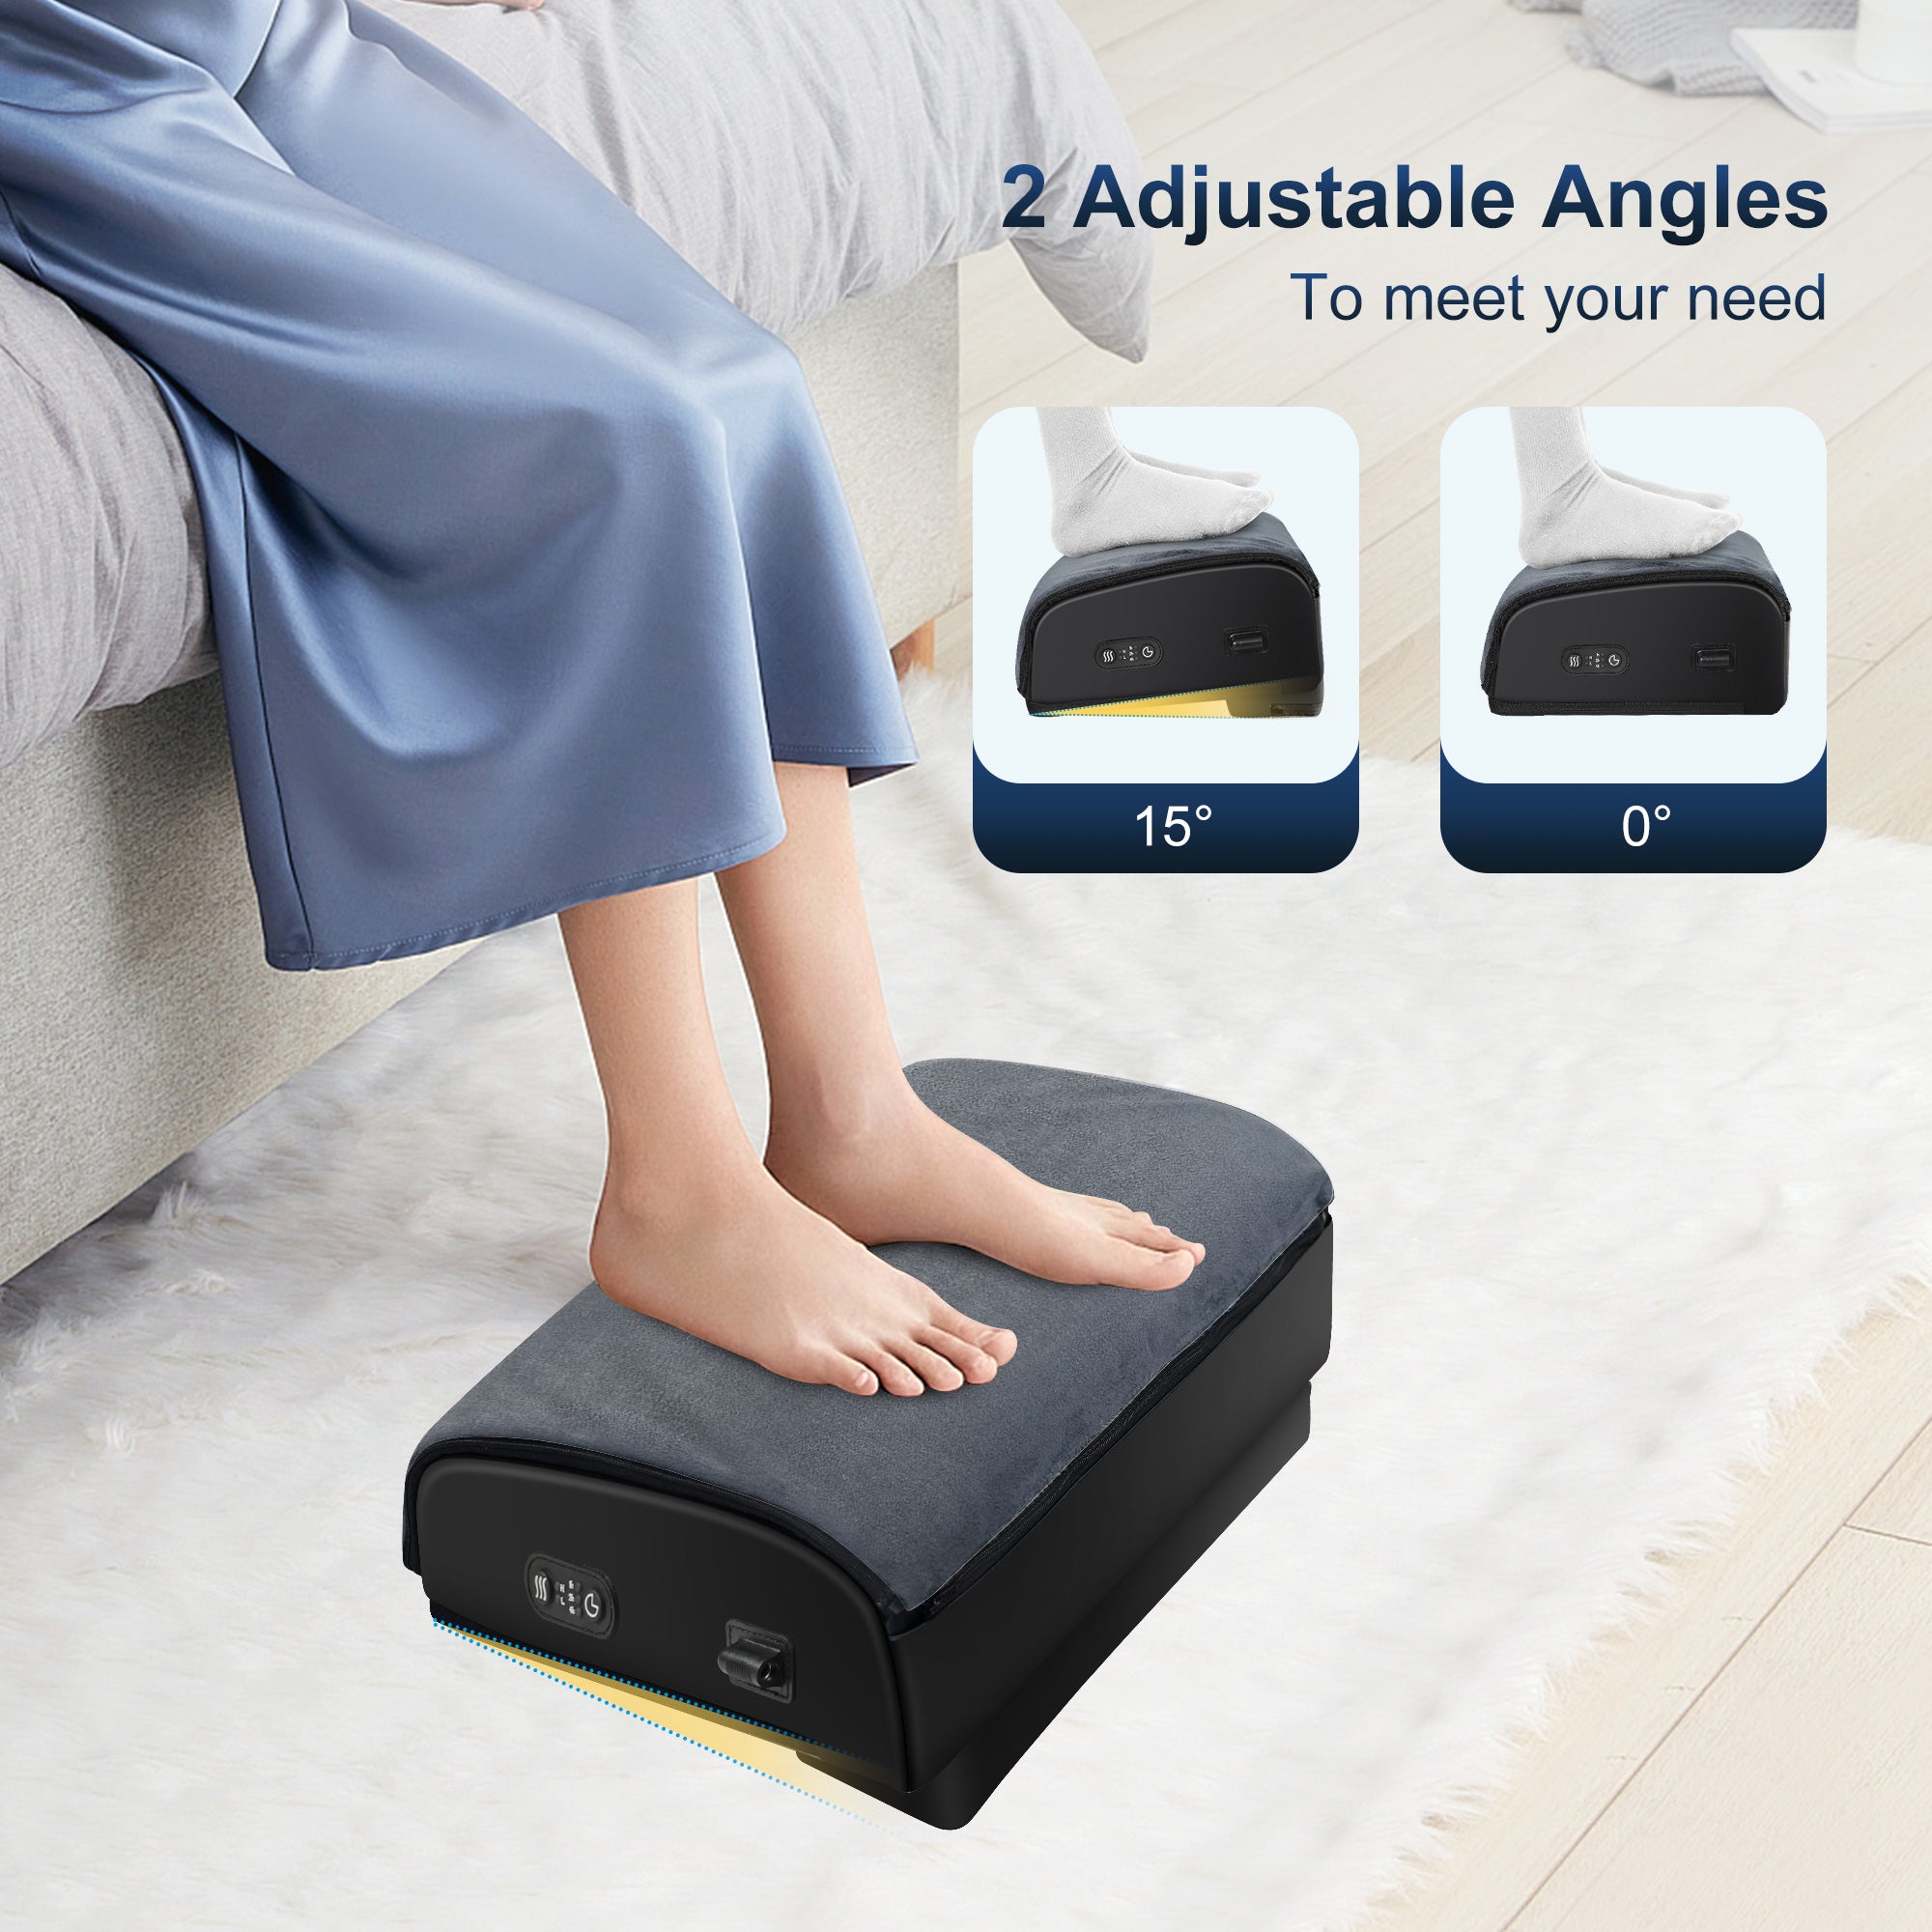 Foot Rest Under Desk, Ergonomic Footrest Cushion Pillow Stools With  High-density